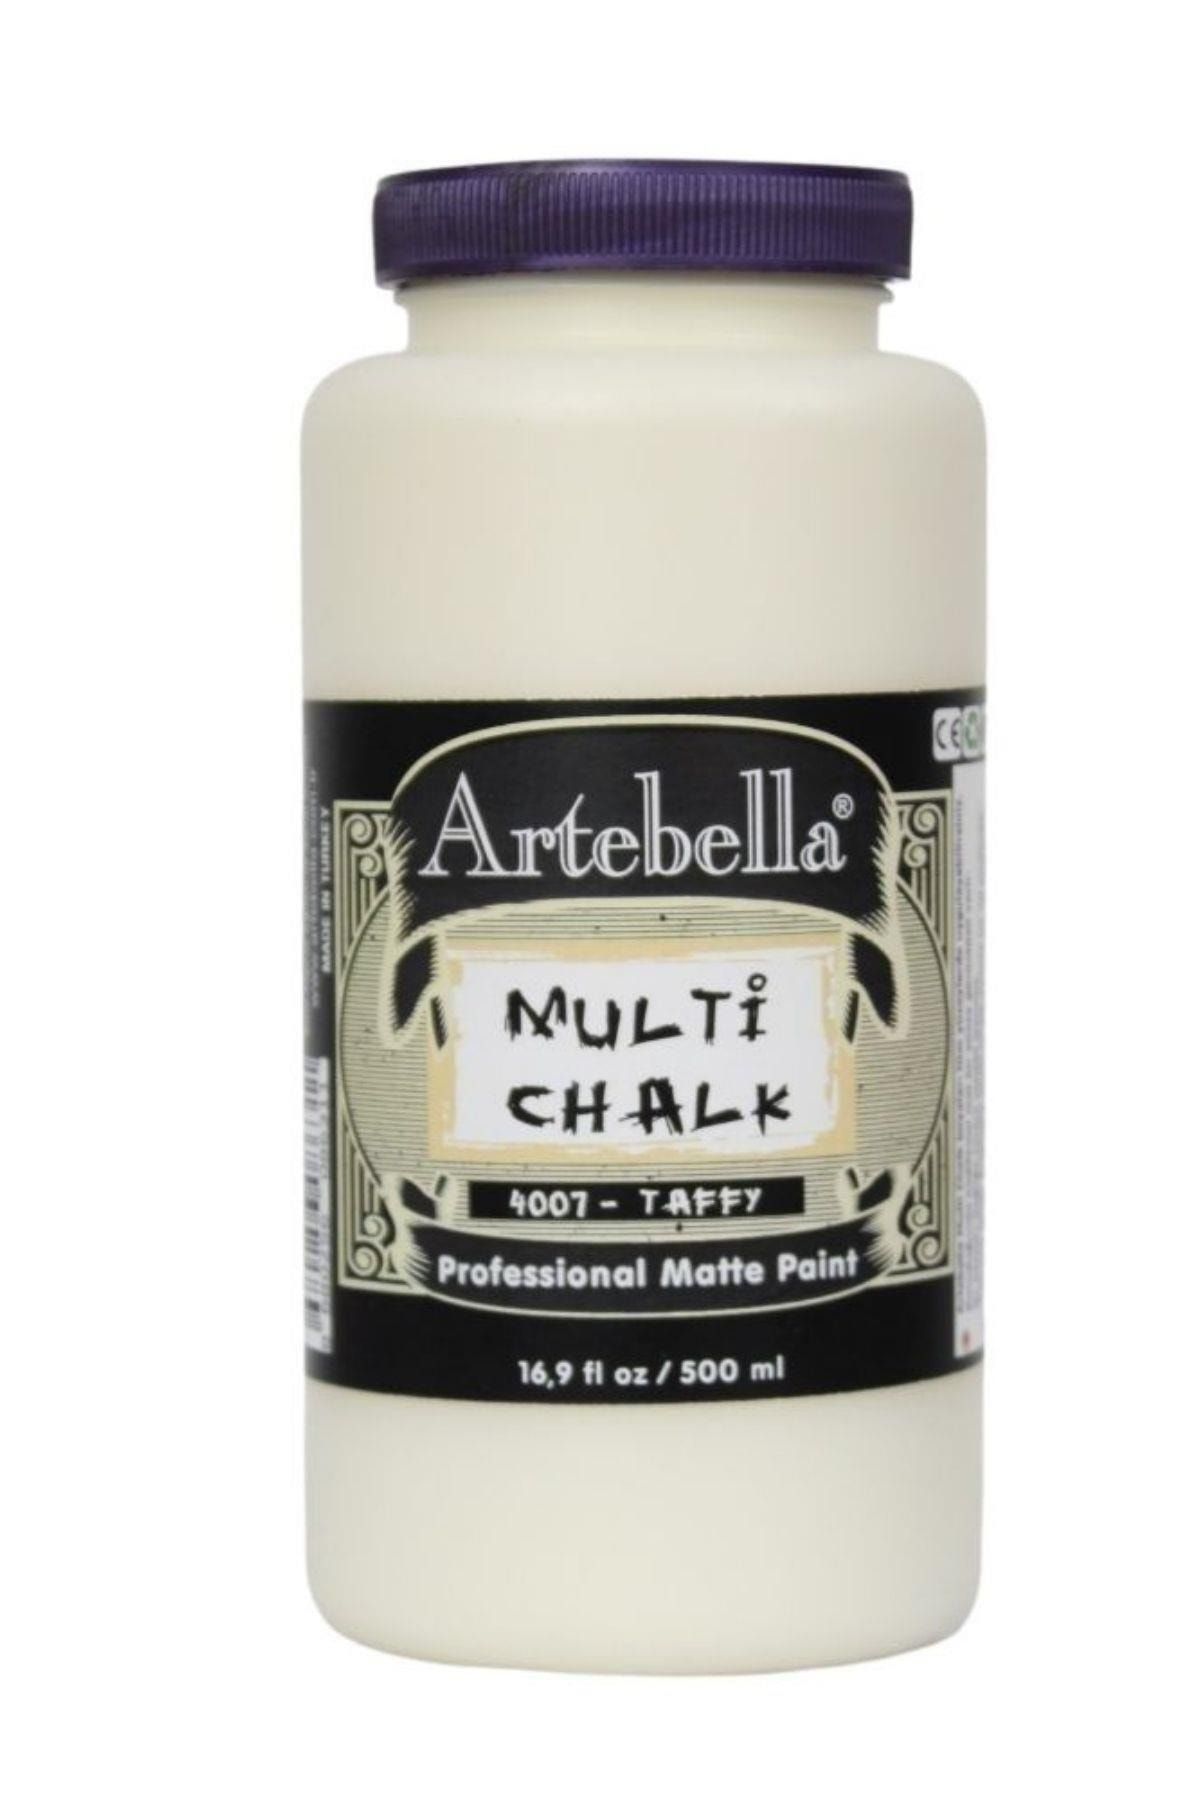 Artebella Multi Decor Chalked Boya 4007 Taffy 500 ml